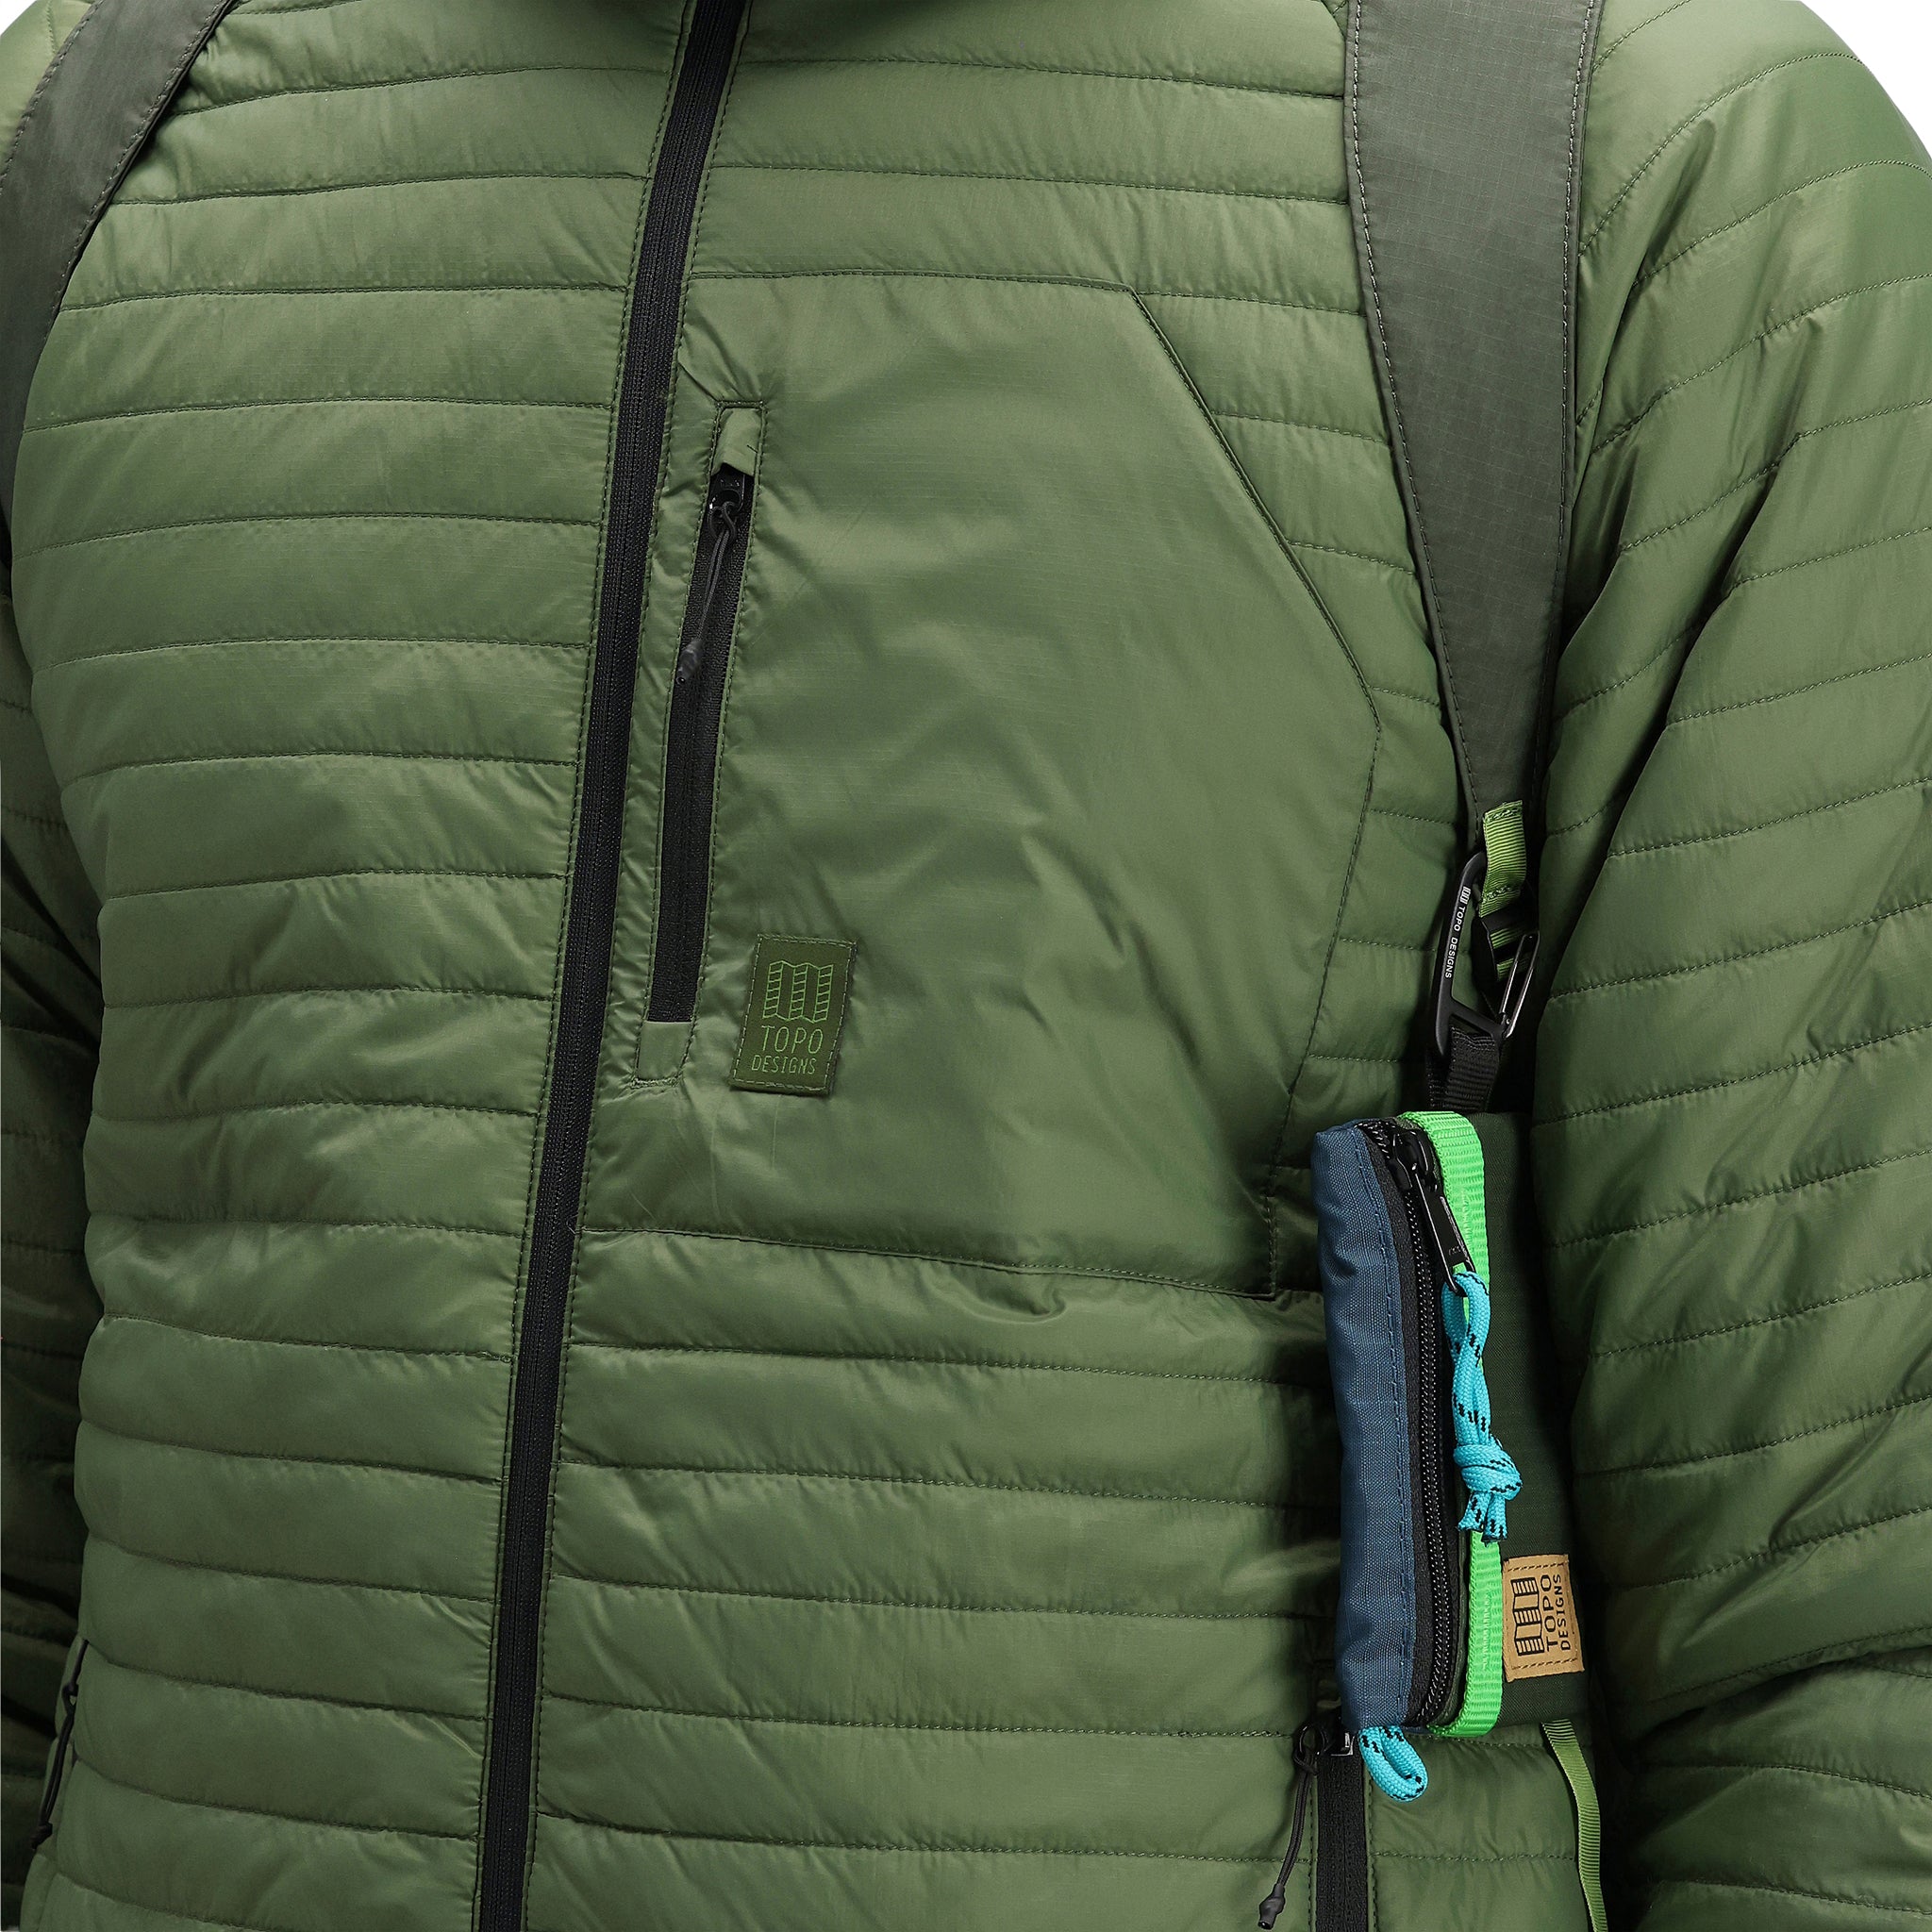 Topo Designs Mountain Accessory Shoulder Bag